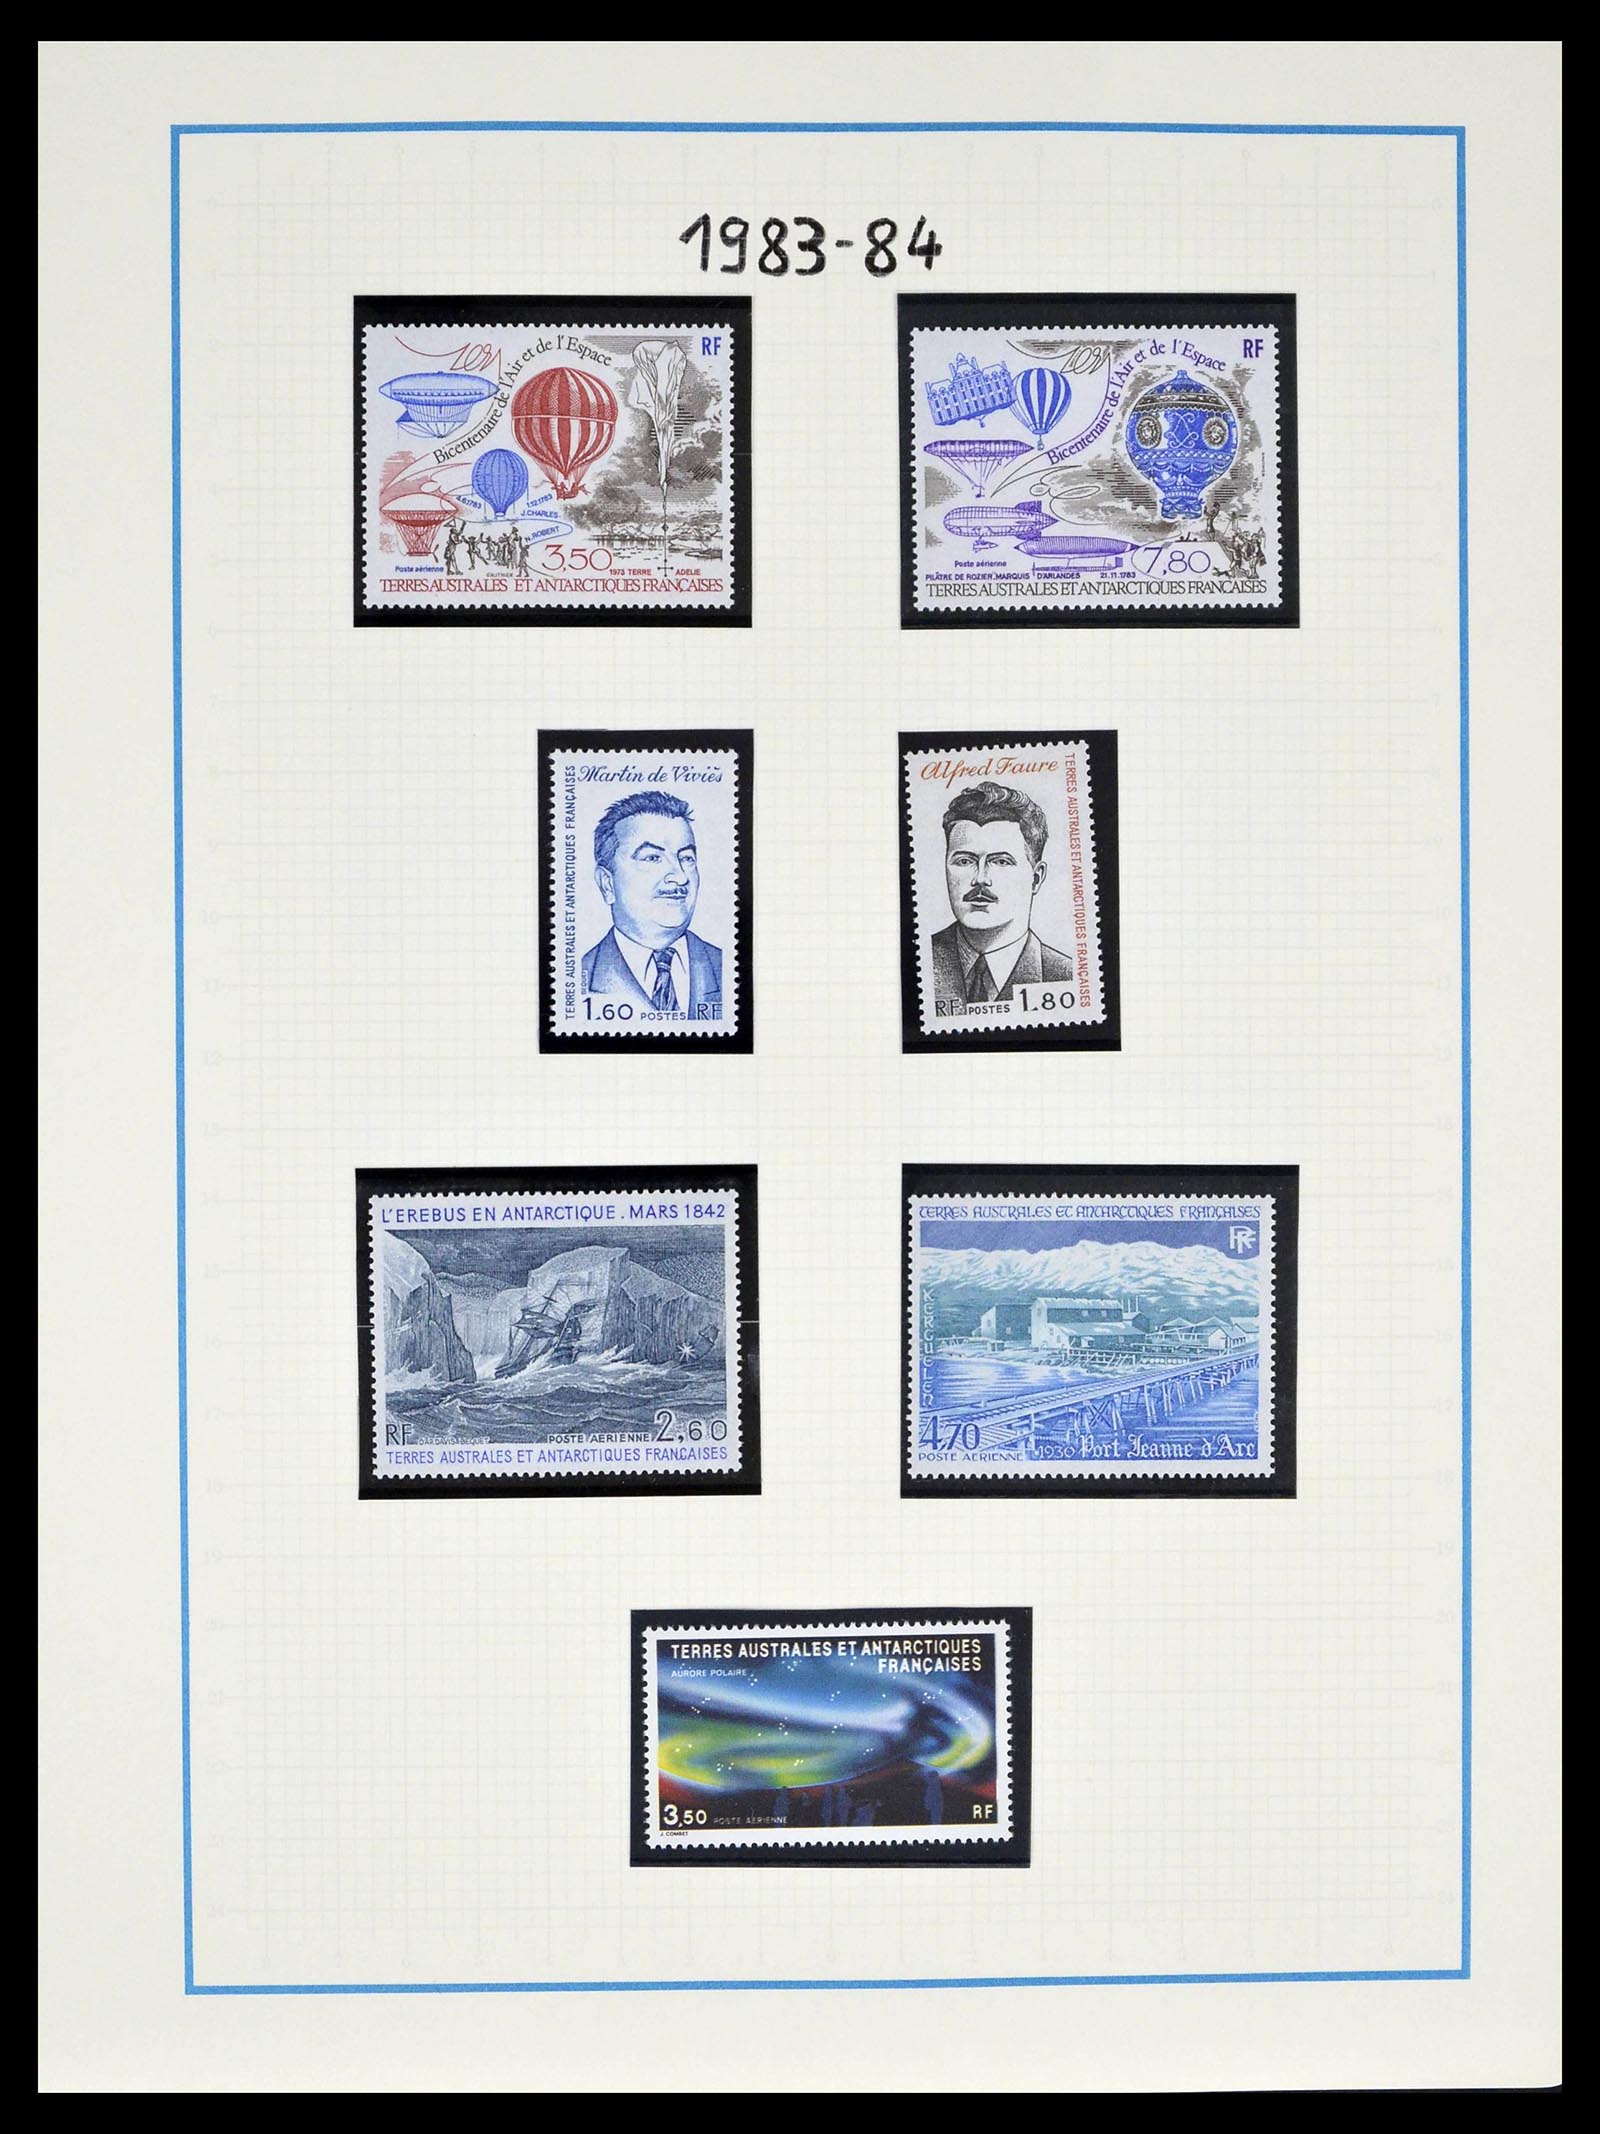 39398 0025 - Stamp collection 39398 Antarctica 1908-1984.